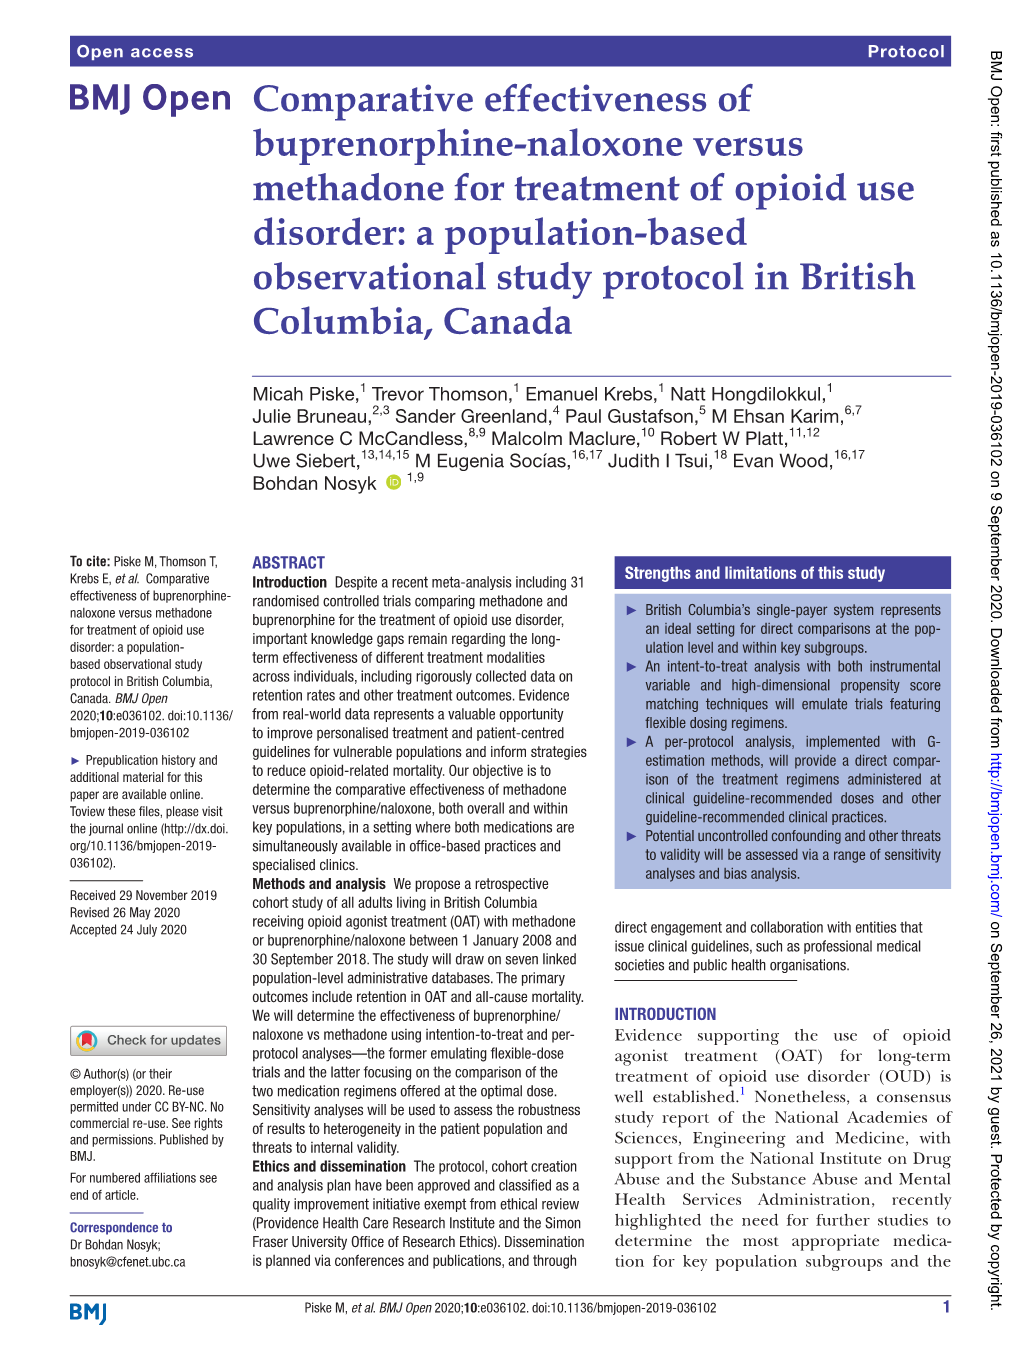 Naloxone Versus Methadone for Treatment of Opioid Use Disorder